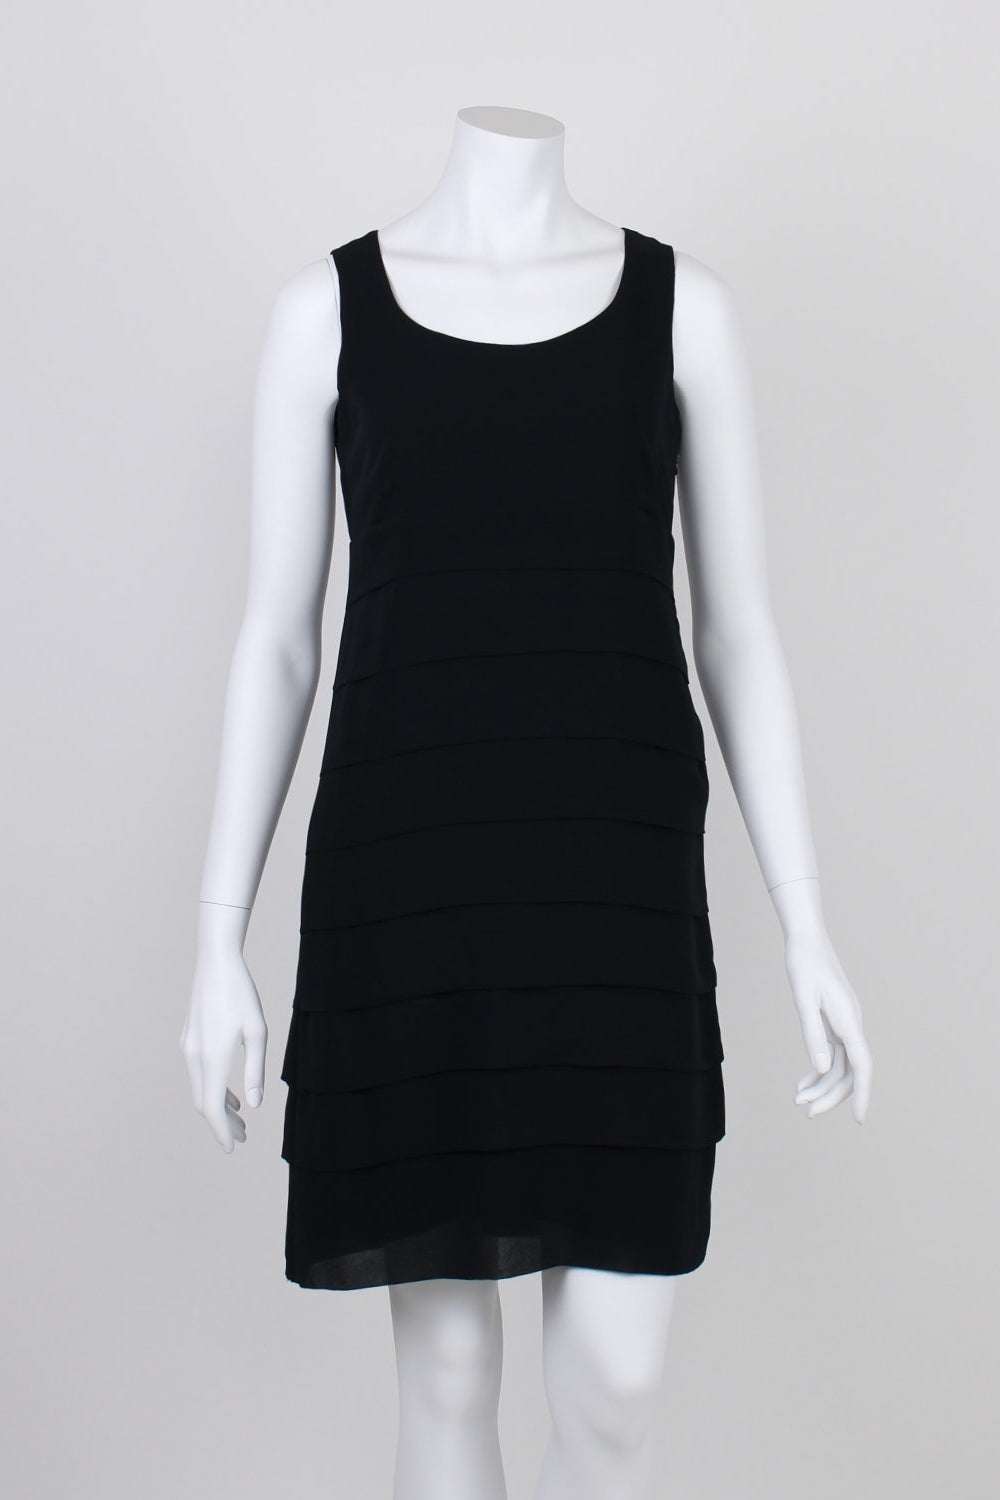 Jacqui E Black Sleeveless Layered Dress 6